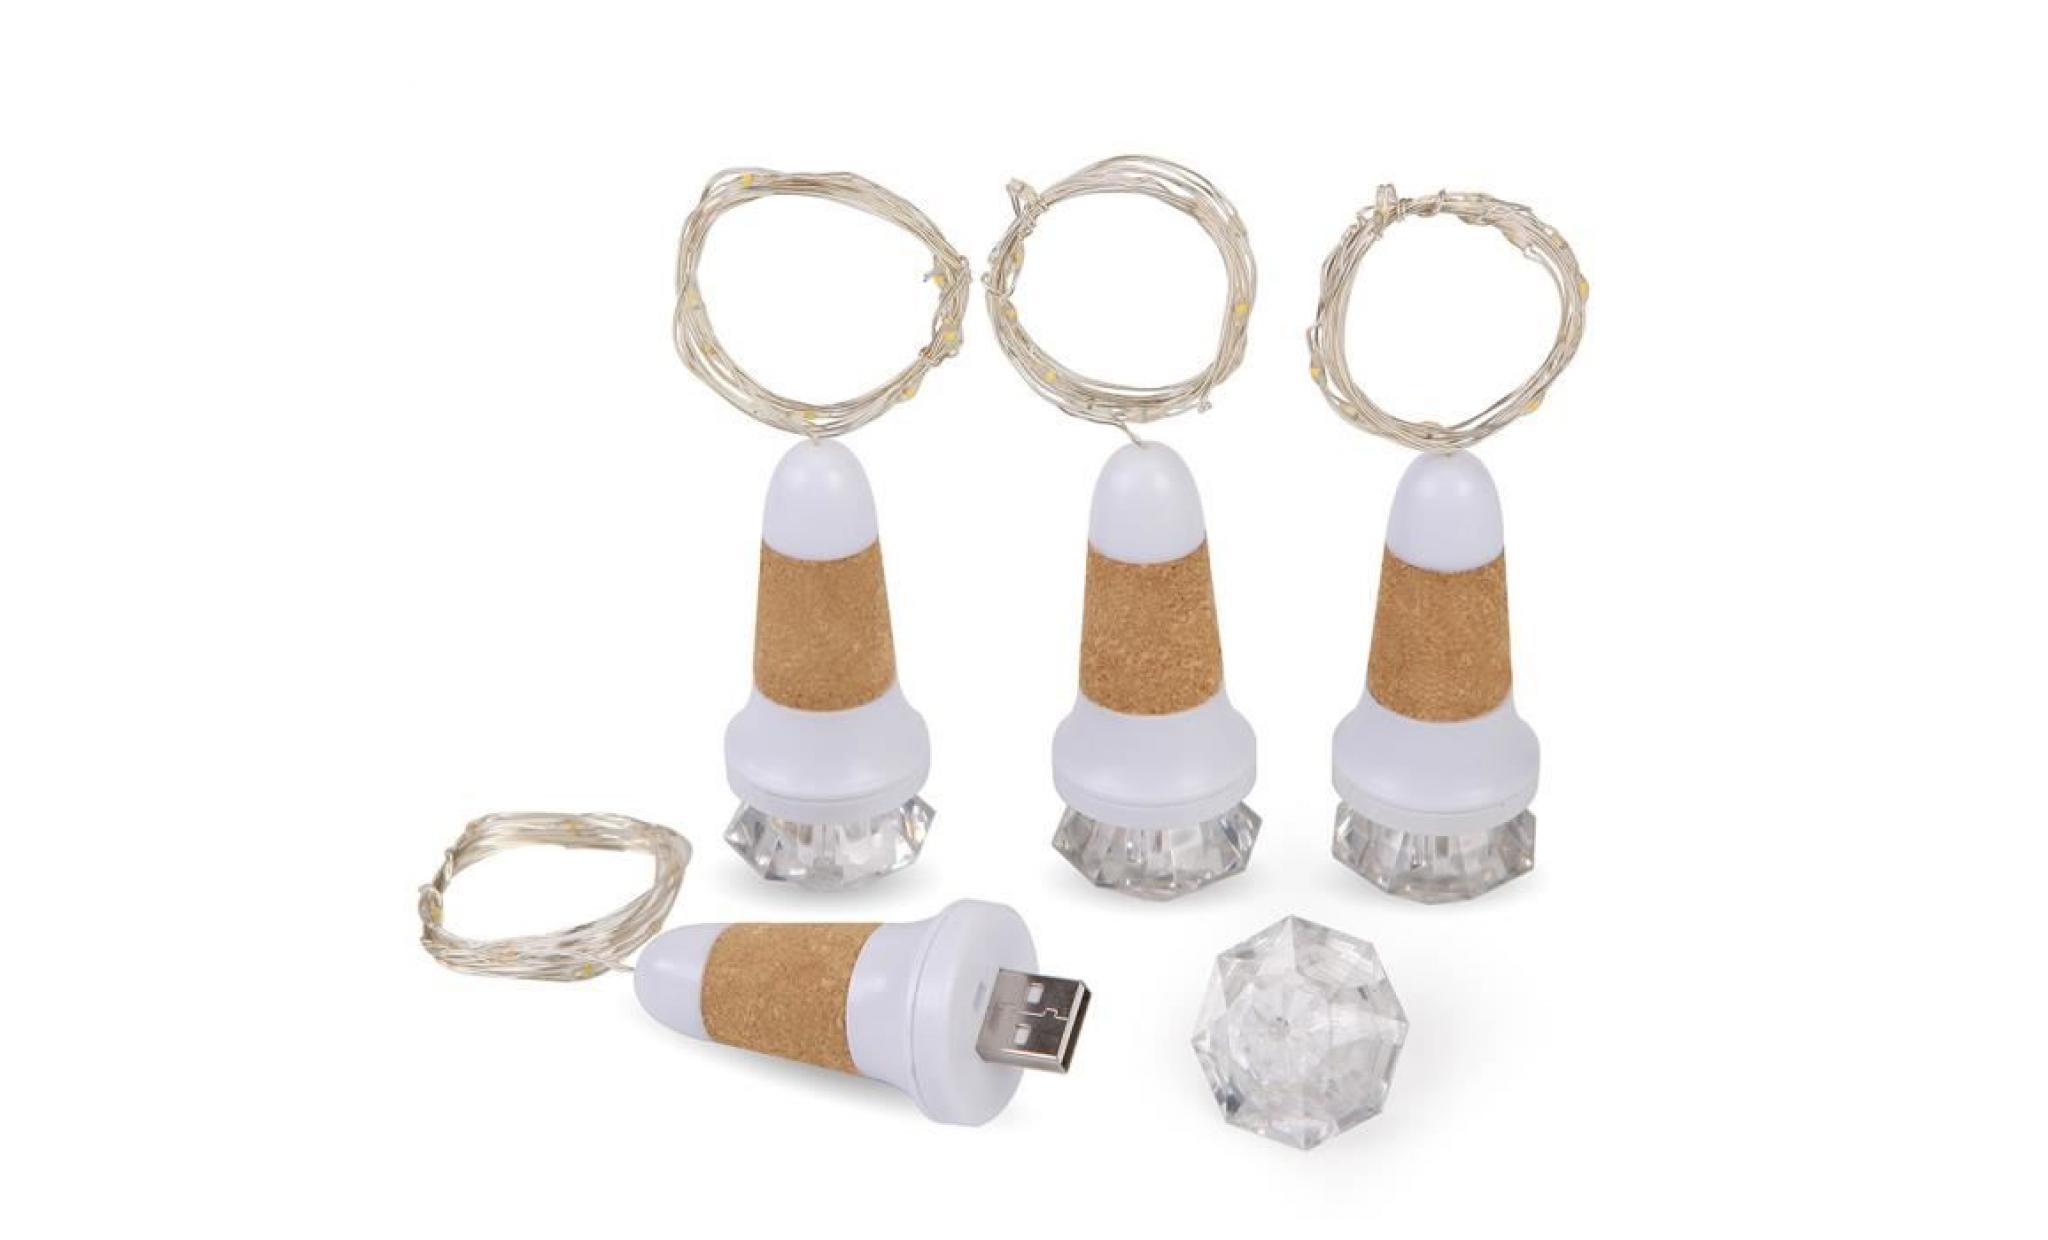 10led copper wire wine bottle cork shape light starry wedding decor usb charging qinhig1614